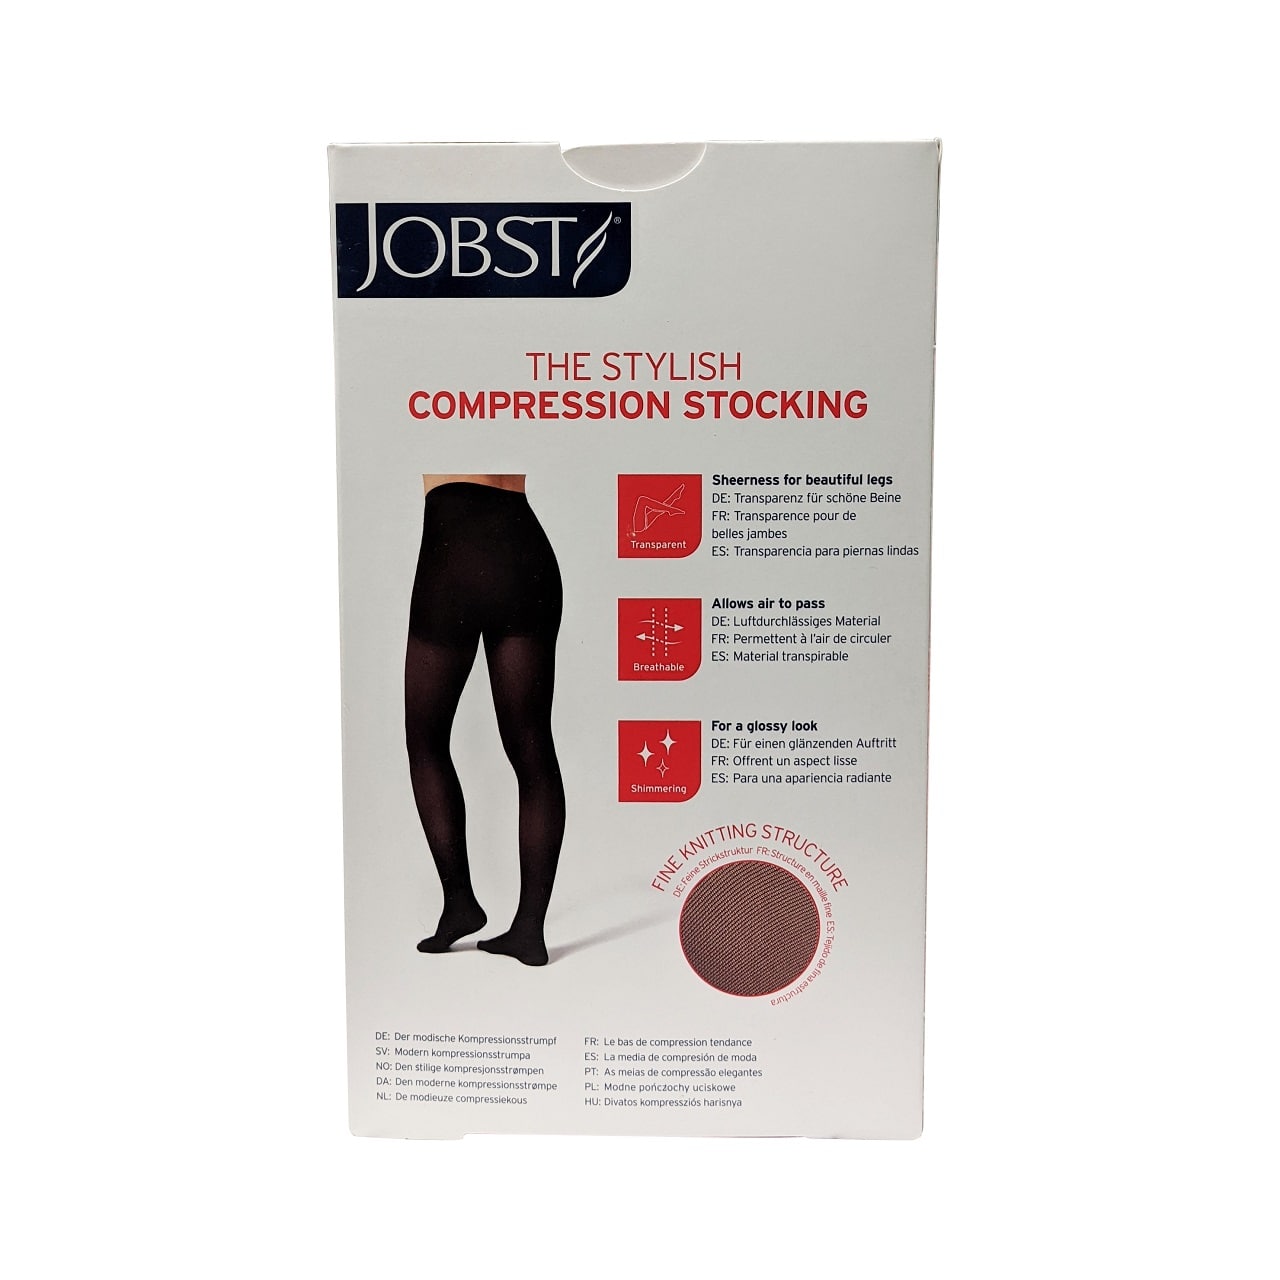 Jobst UltraSheer Compression Stockings 20-30 mmHg - Pantyhose